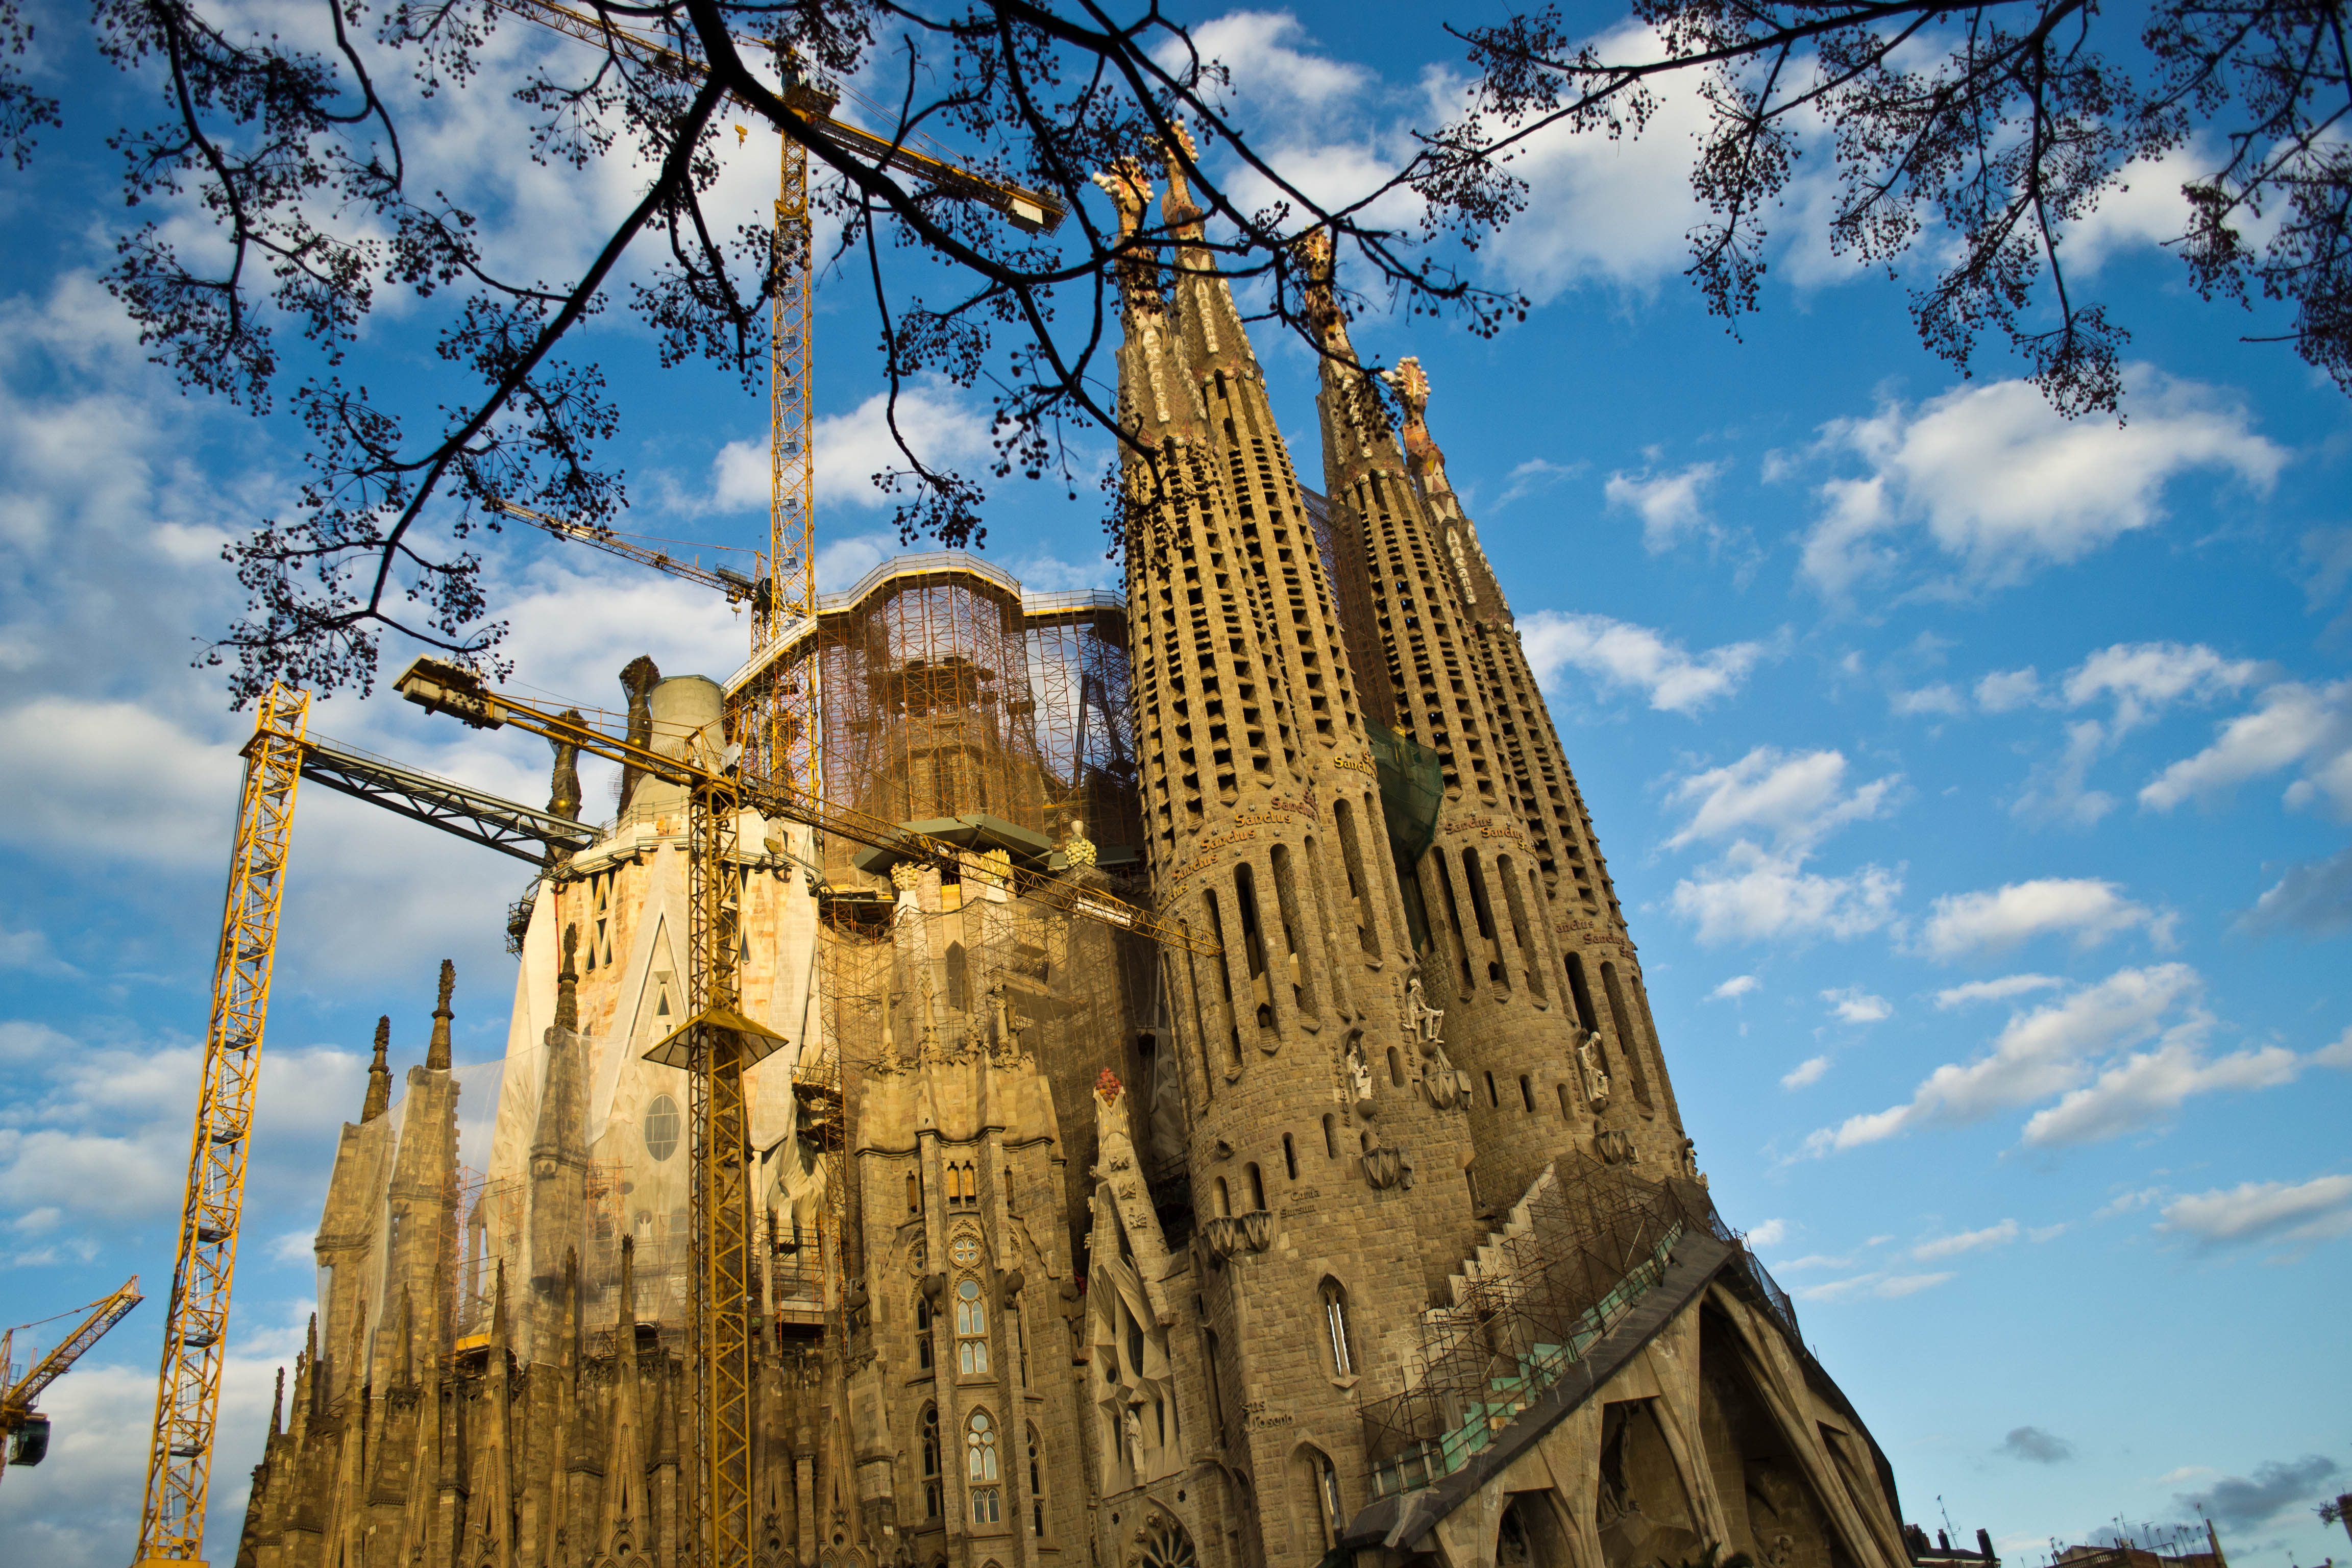 In the footsteps of Antoni Gaudí